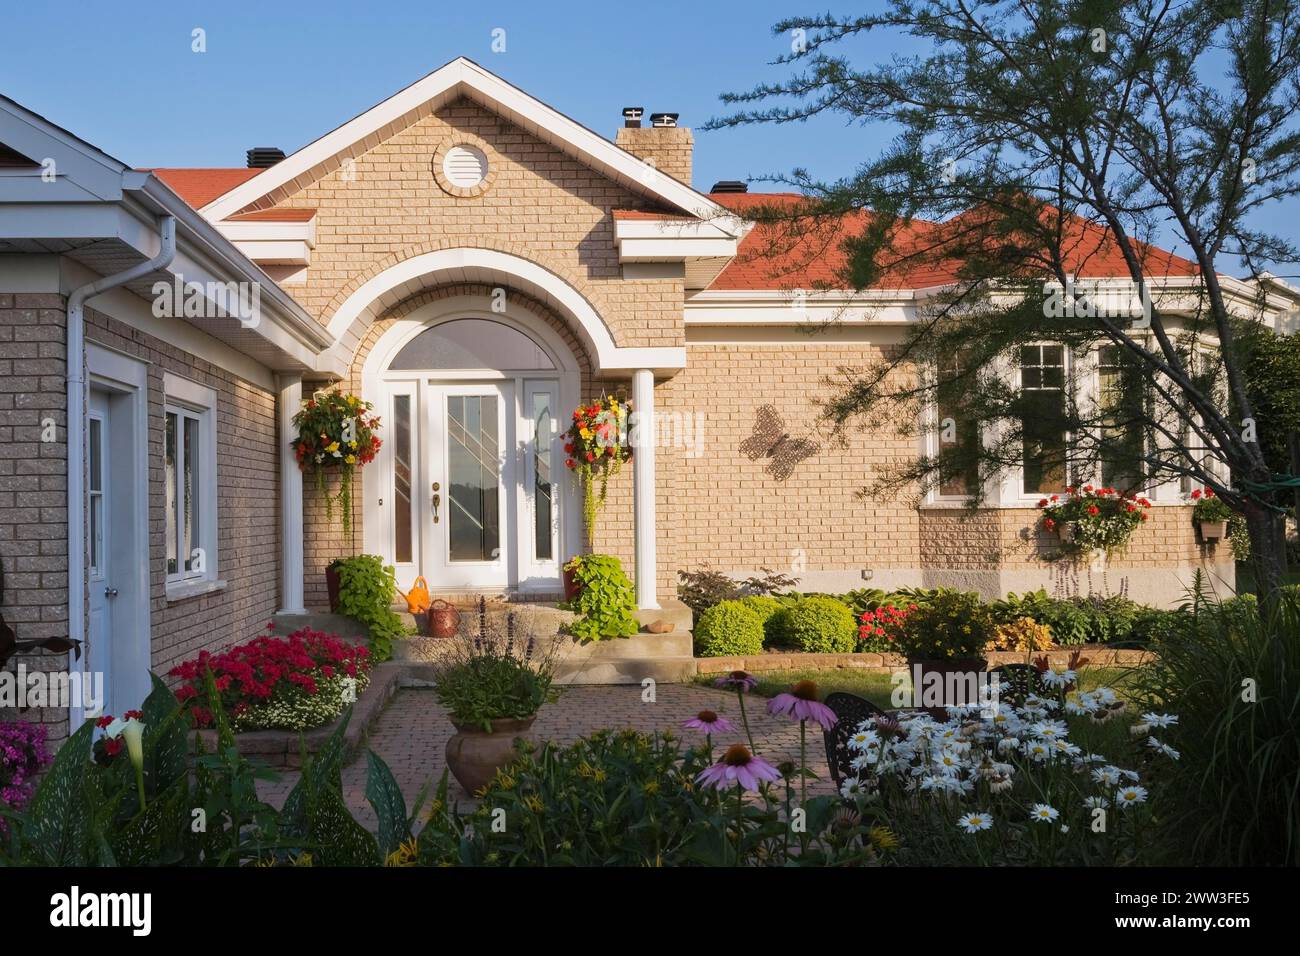 Tan brick home with white trim and landscaped front yard with raised border with red Pelargonium, Geranium flowers, Echinacea purpurea, Coneflowers Stock Photo